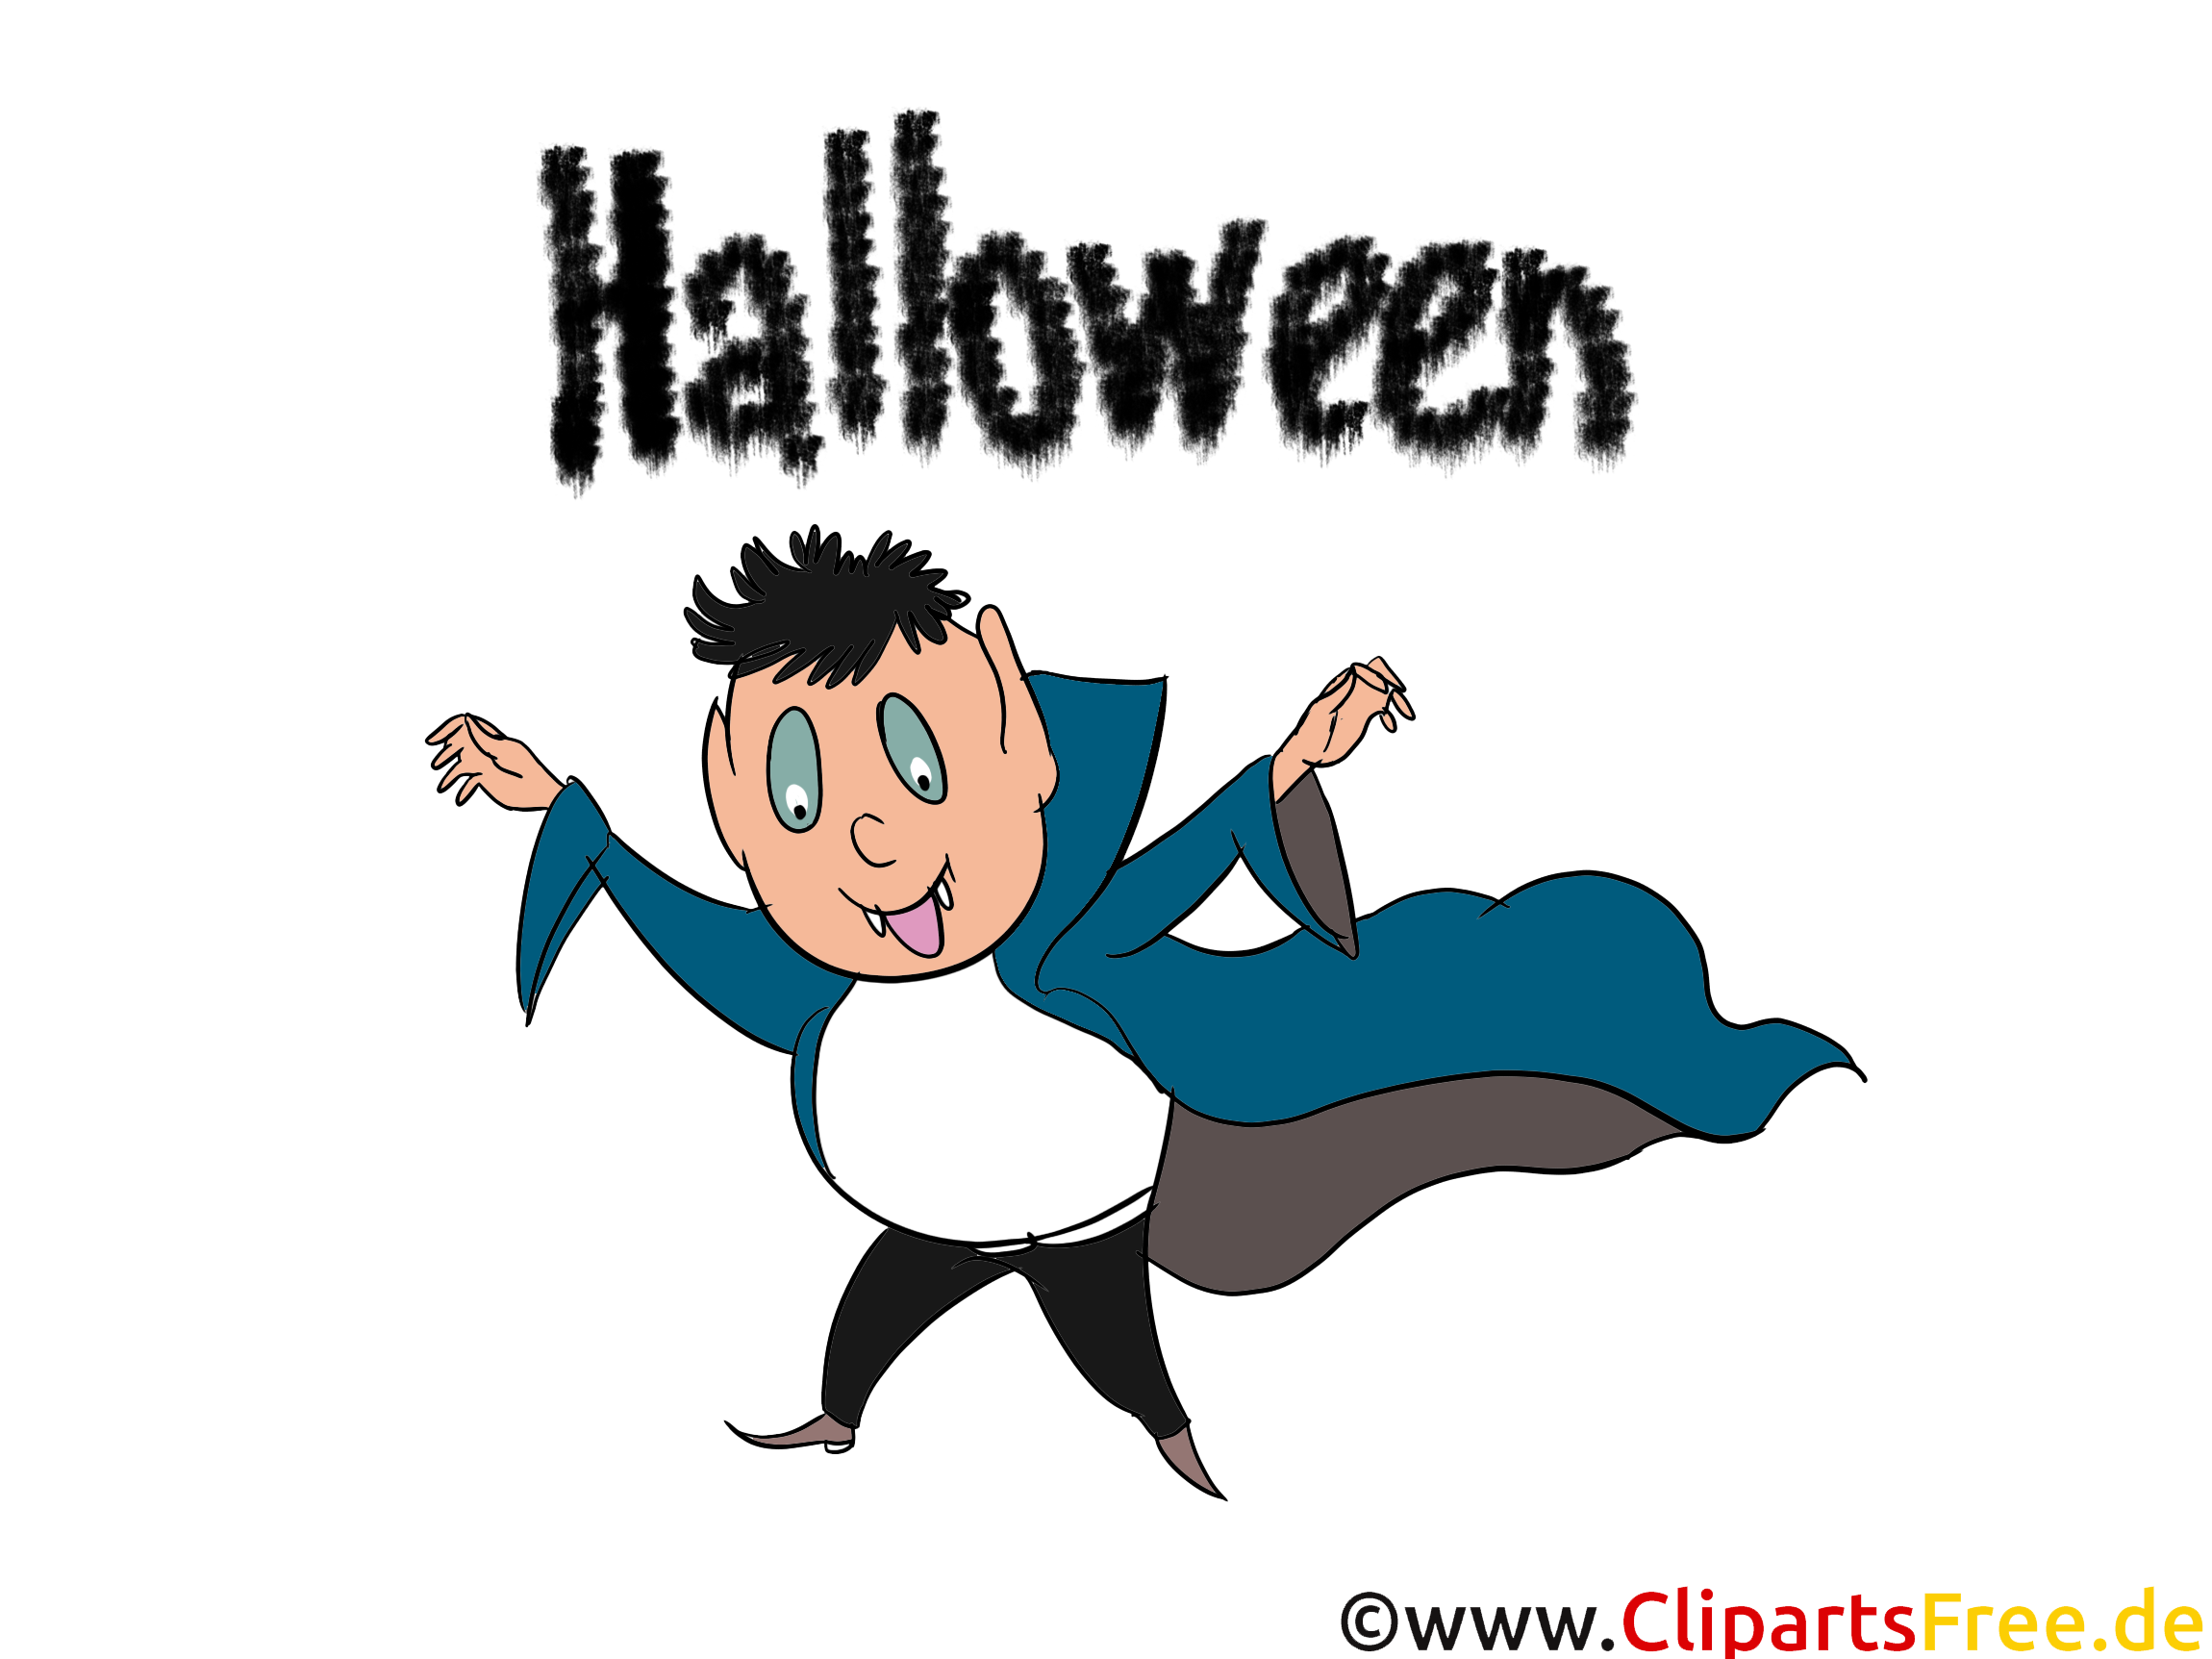 Vampire dessin gratuit - Halloween image